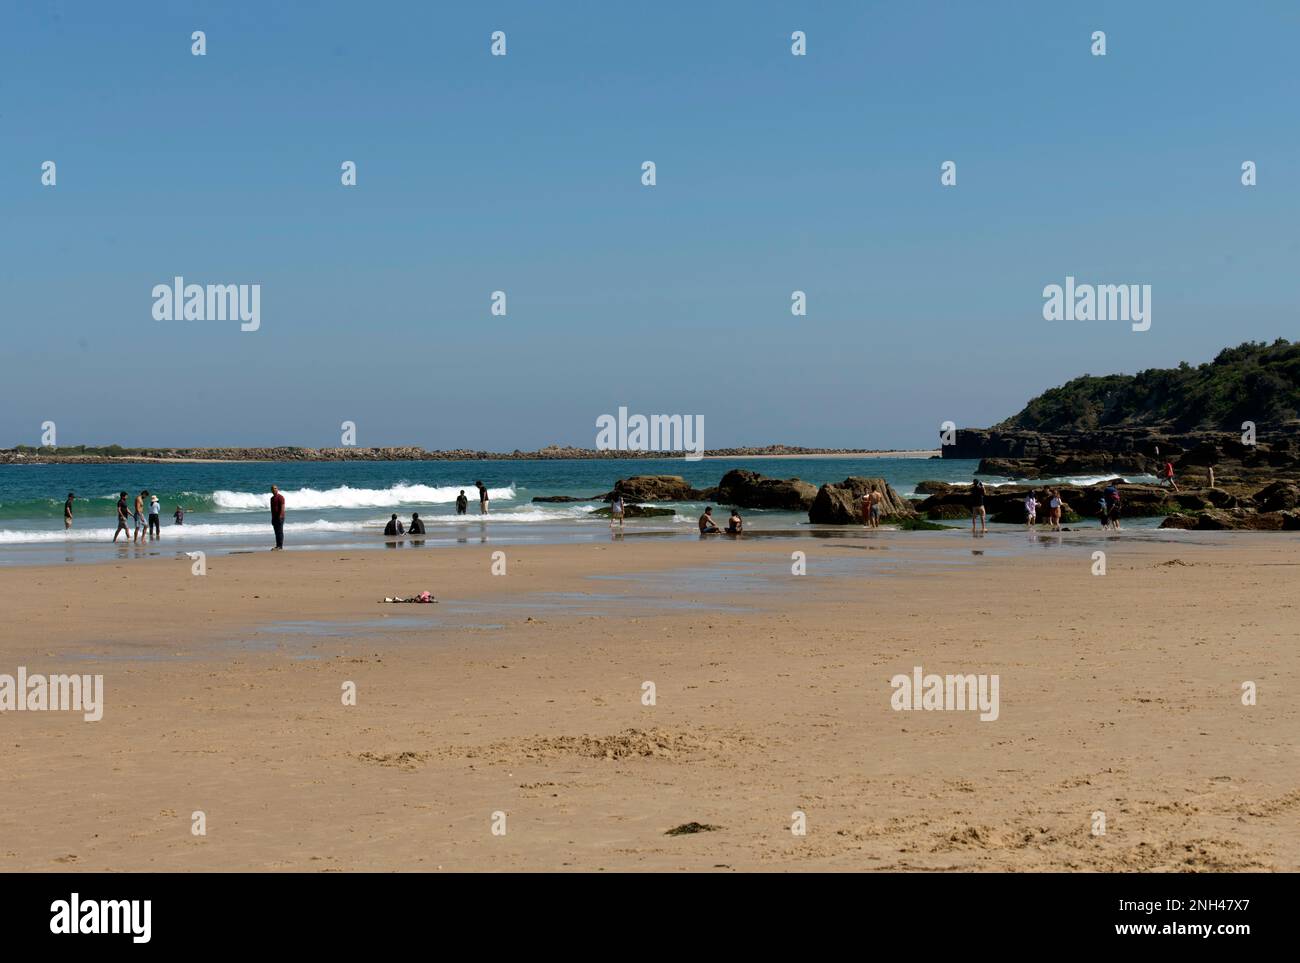 People enjoying a sunny day on Caves Beach, NSW, Australia (Photo by Tara Chand Malhotra) Stock Photo